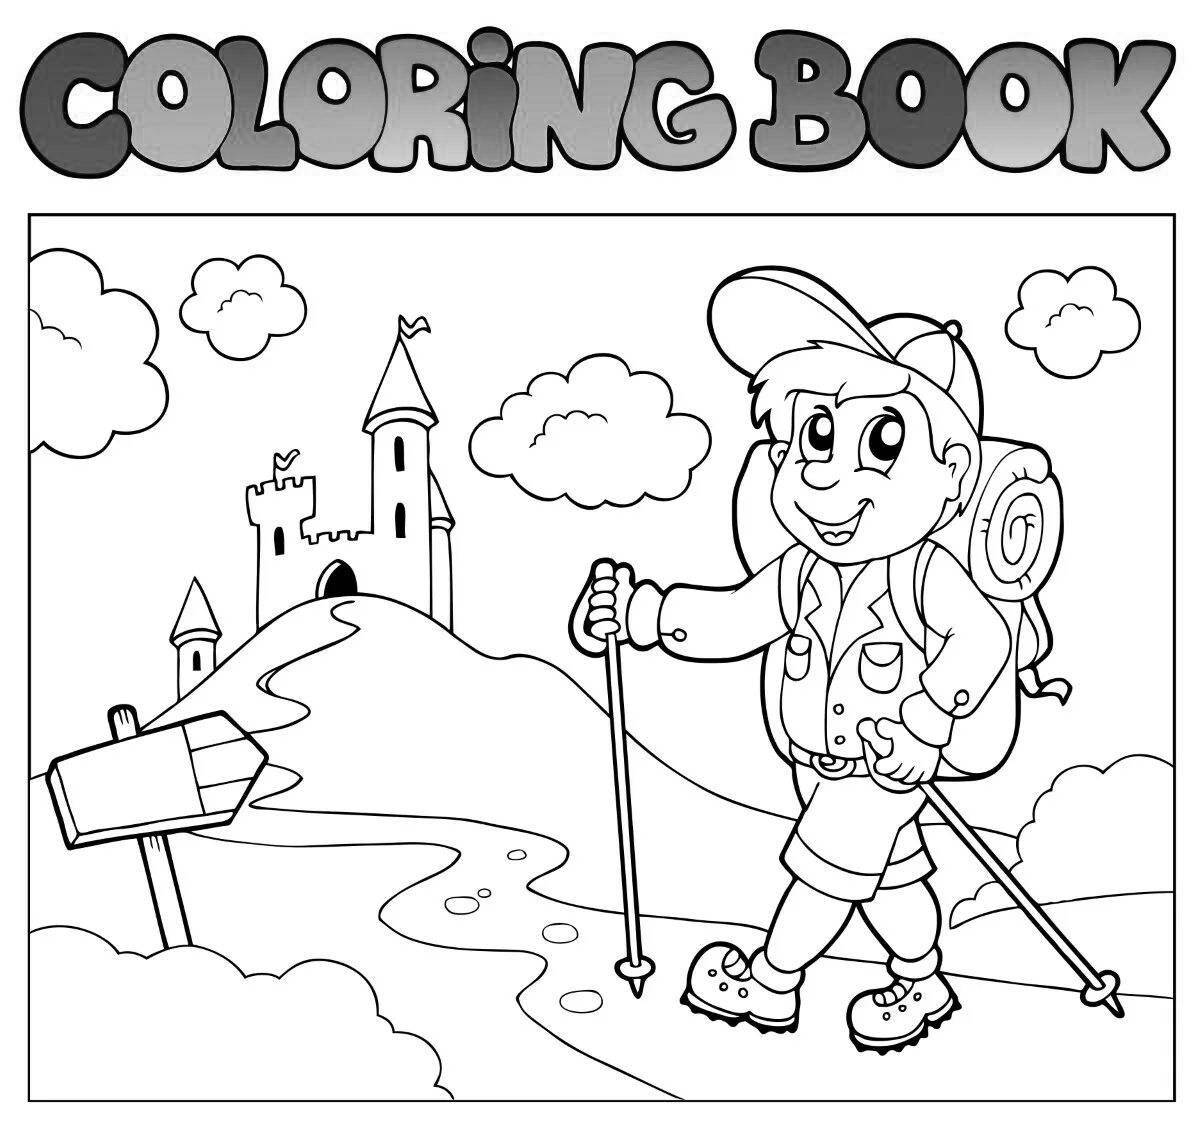 Inspiring travel coloring book